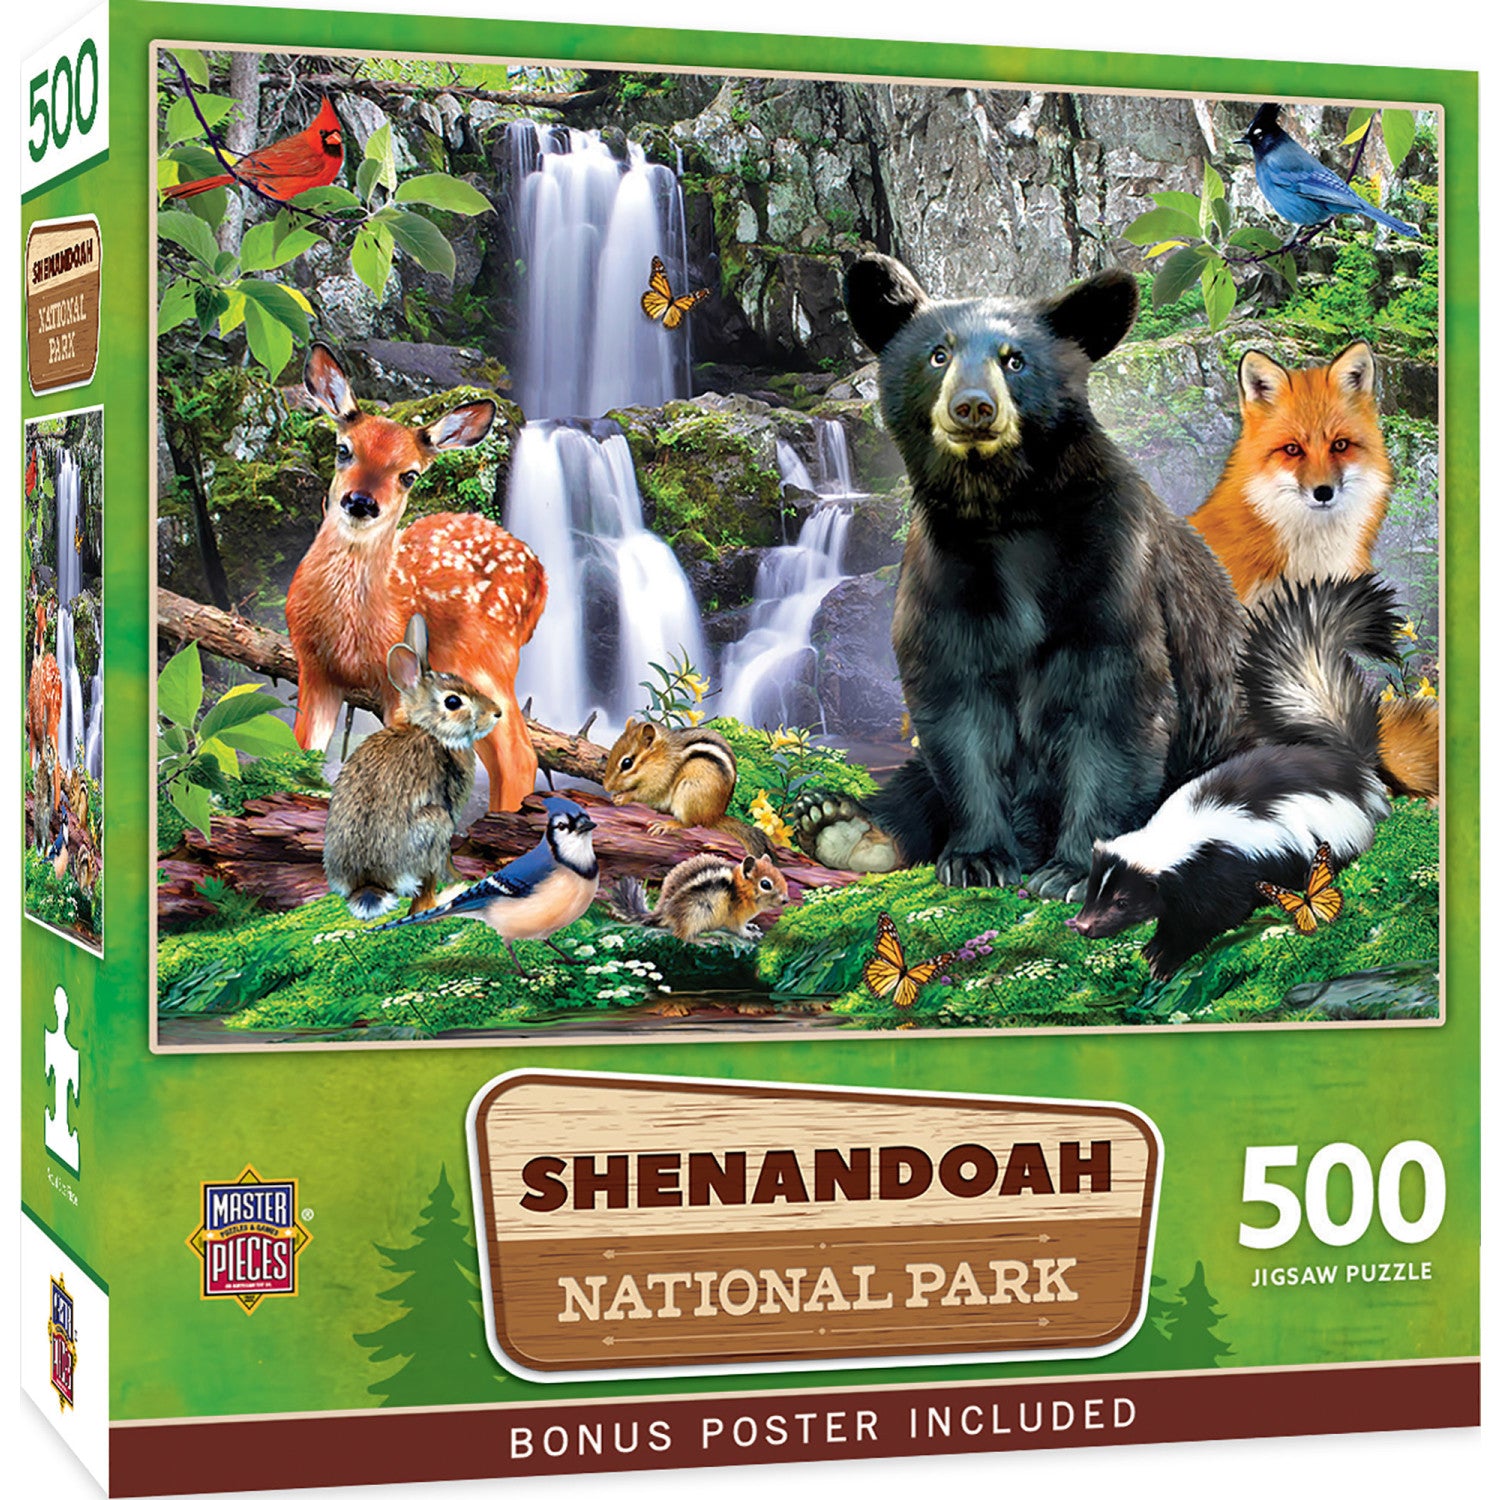 Shenandoah National Park 500 Piece Jigsaw Puzzle